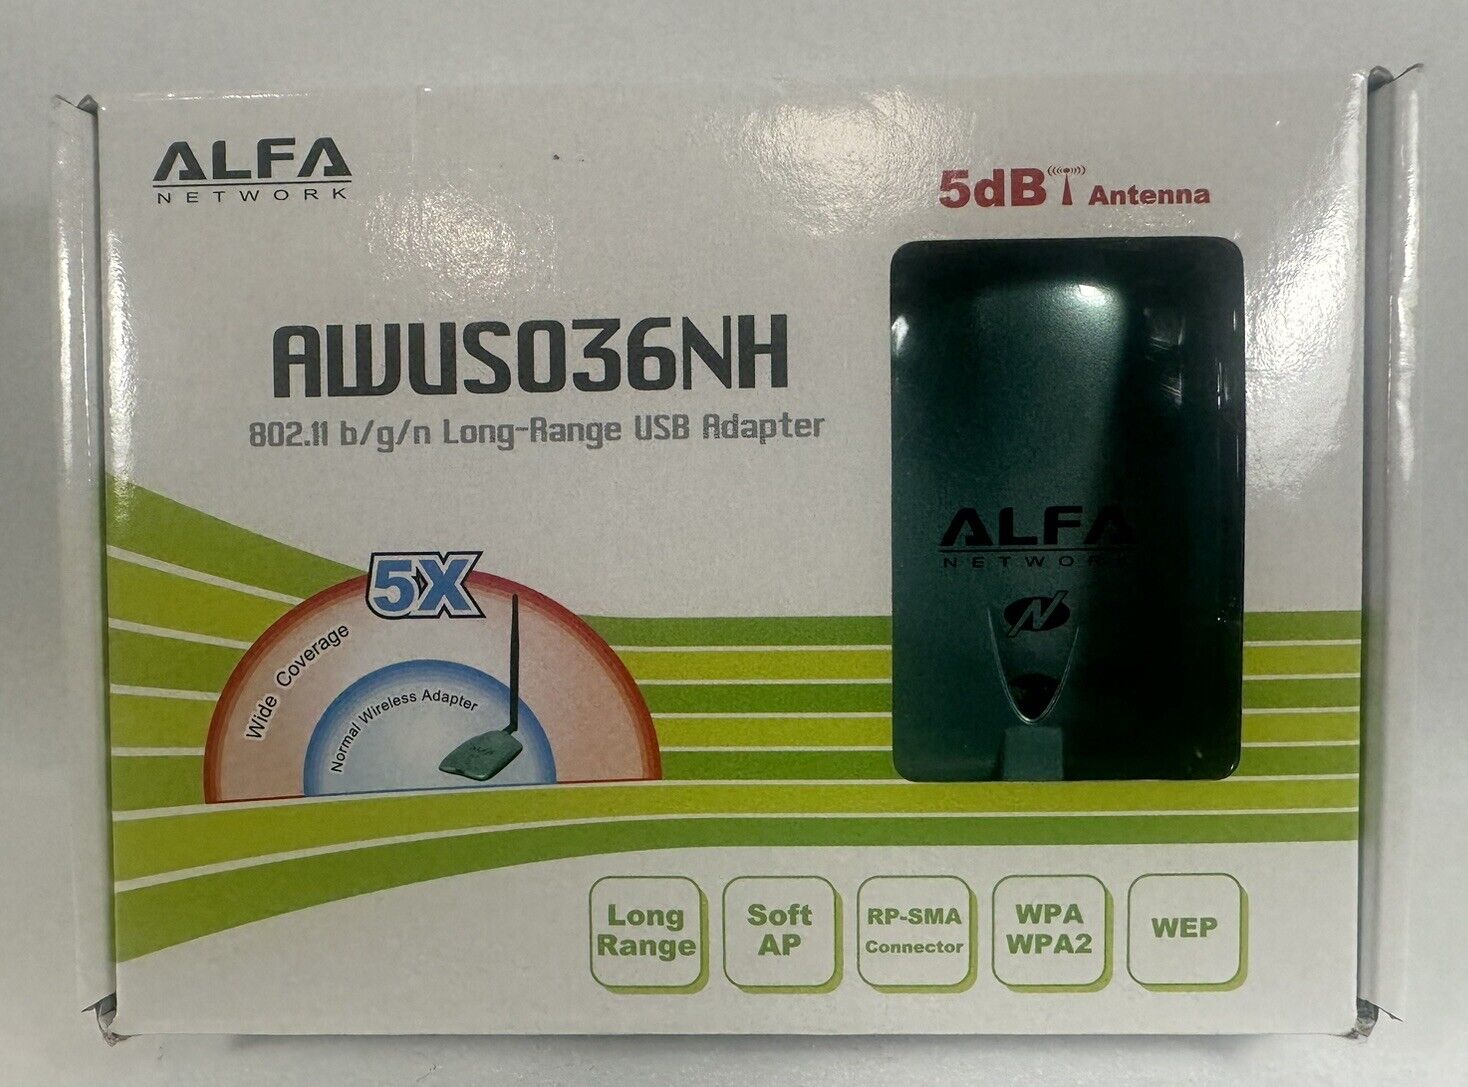 ALFA Network AWUS036NH 802.11 b/g/n Long Range Wireless USB Adapter